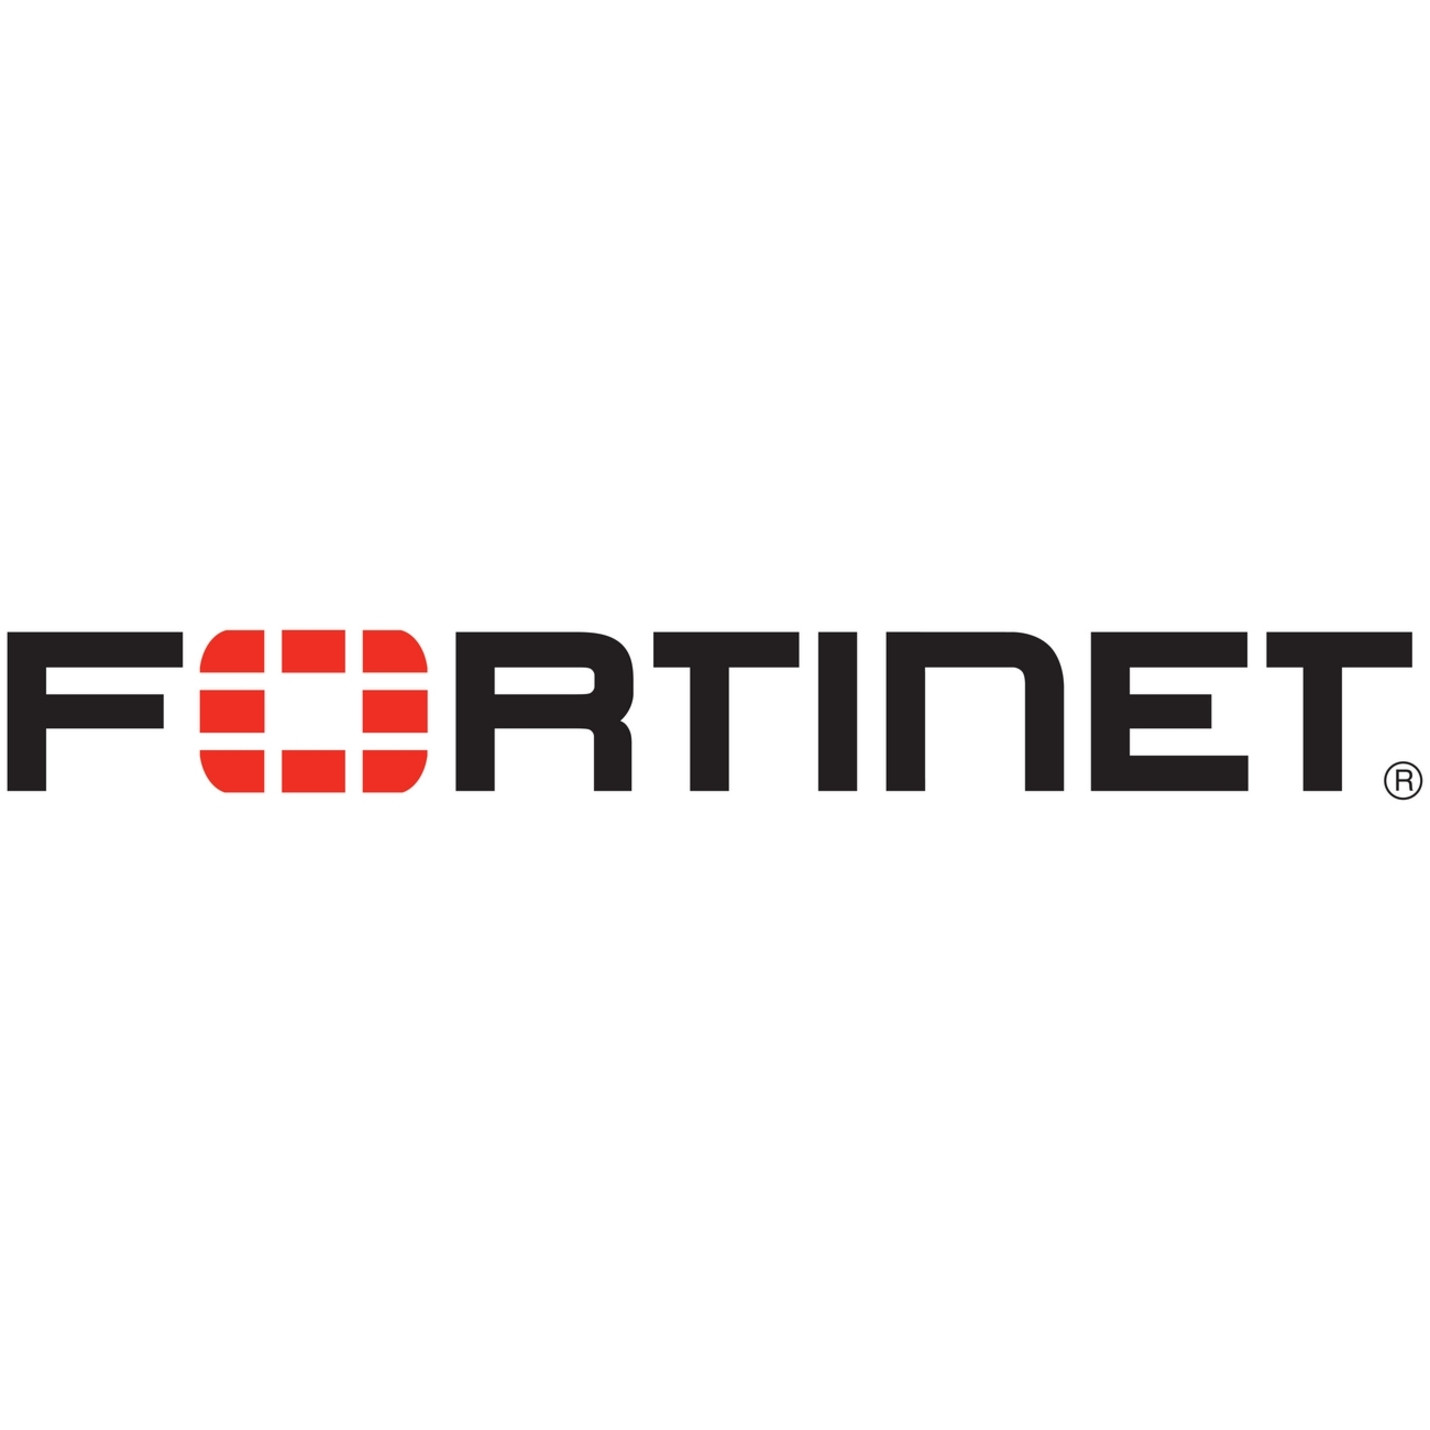 Fortinet Enterprise Bundle (FortiCare plus NGFW, AV, Web Filtering, Antispam, Botnet IP/Domain, FortiSandbox Cloud and Mobile Secu… FC-10-00E81-871-0…